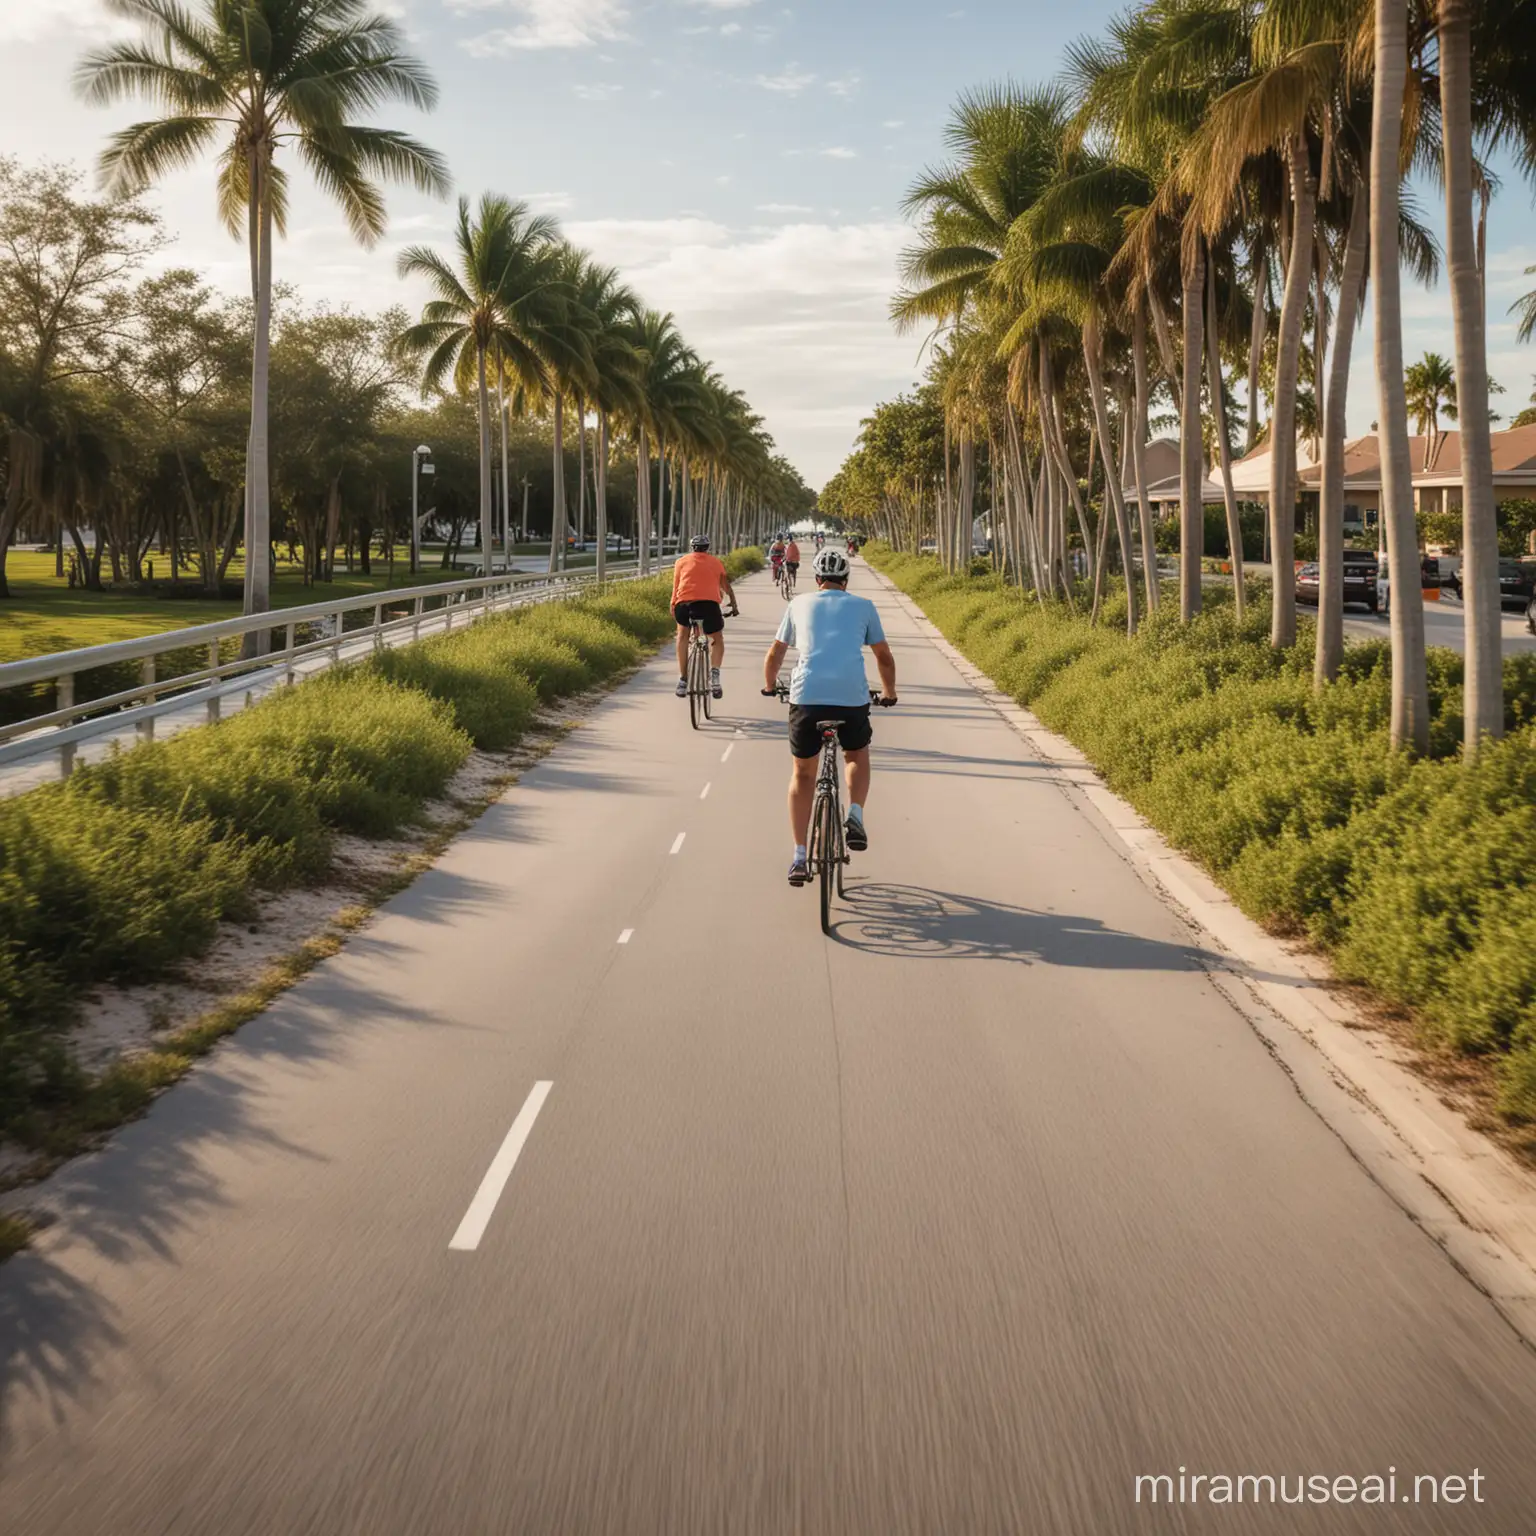 Scenic Bike Ride Down Cape Coral Floridas Picturesque Paths